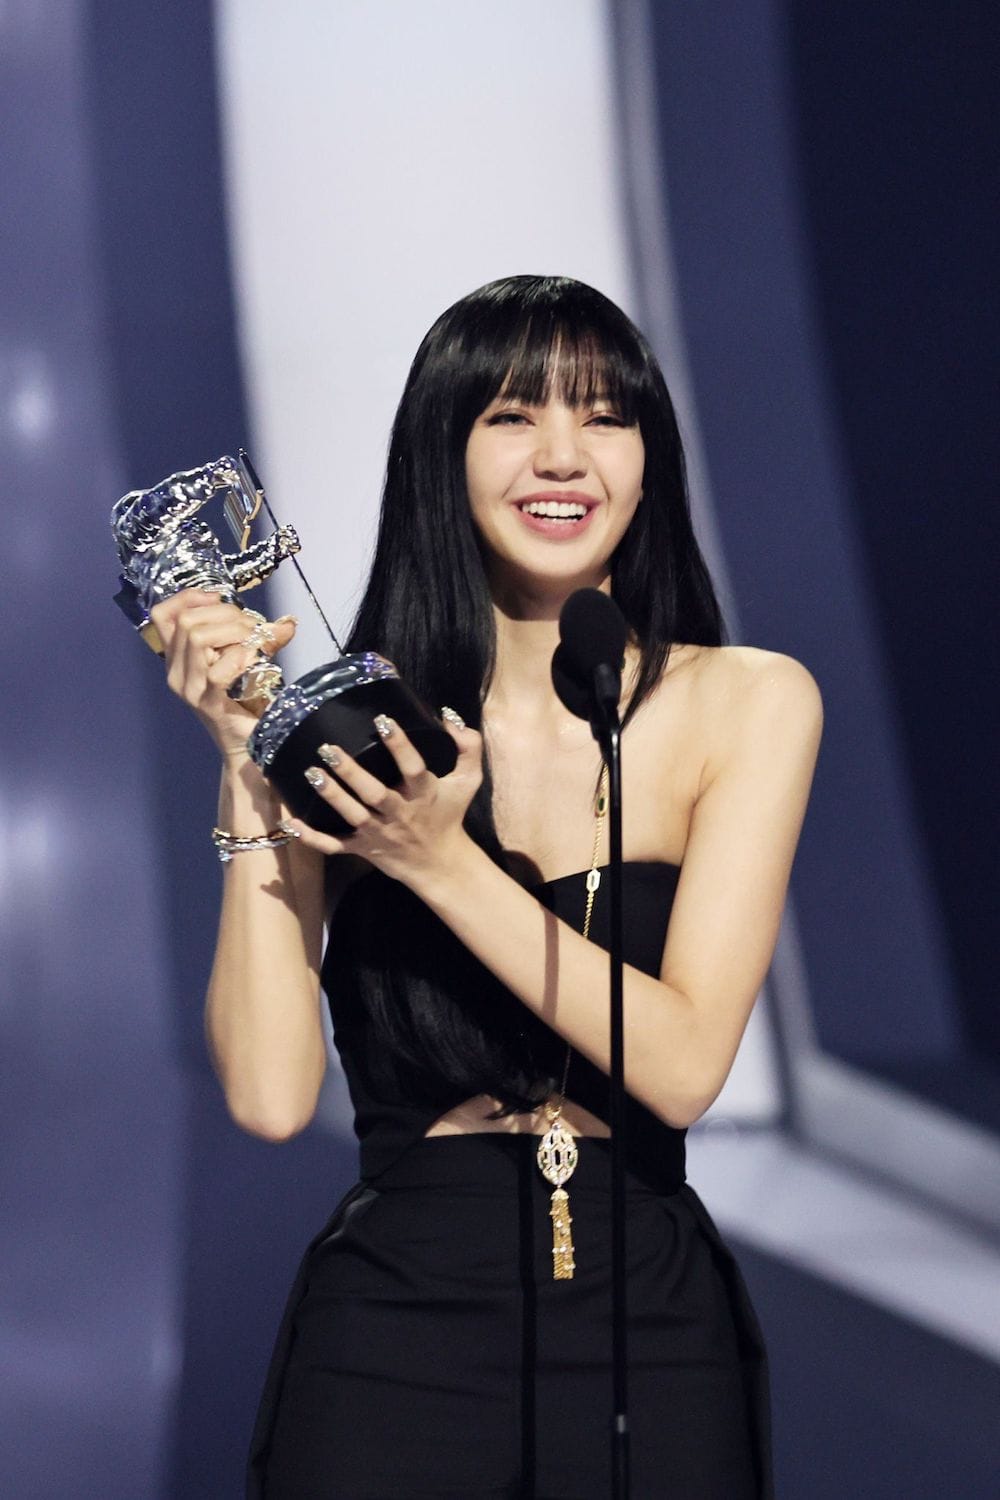 Blackpink Lisa won the 'Best K-POP' award for LALISA at the 2022 MTV Video Music Awards (VMAs).